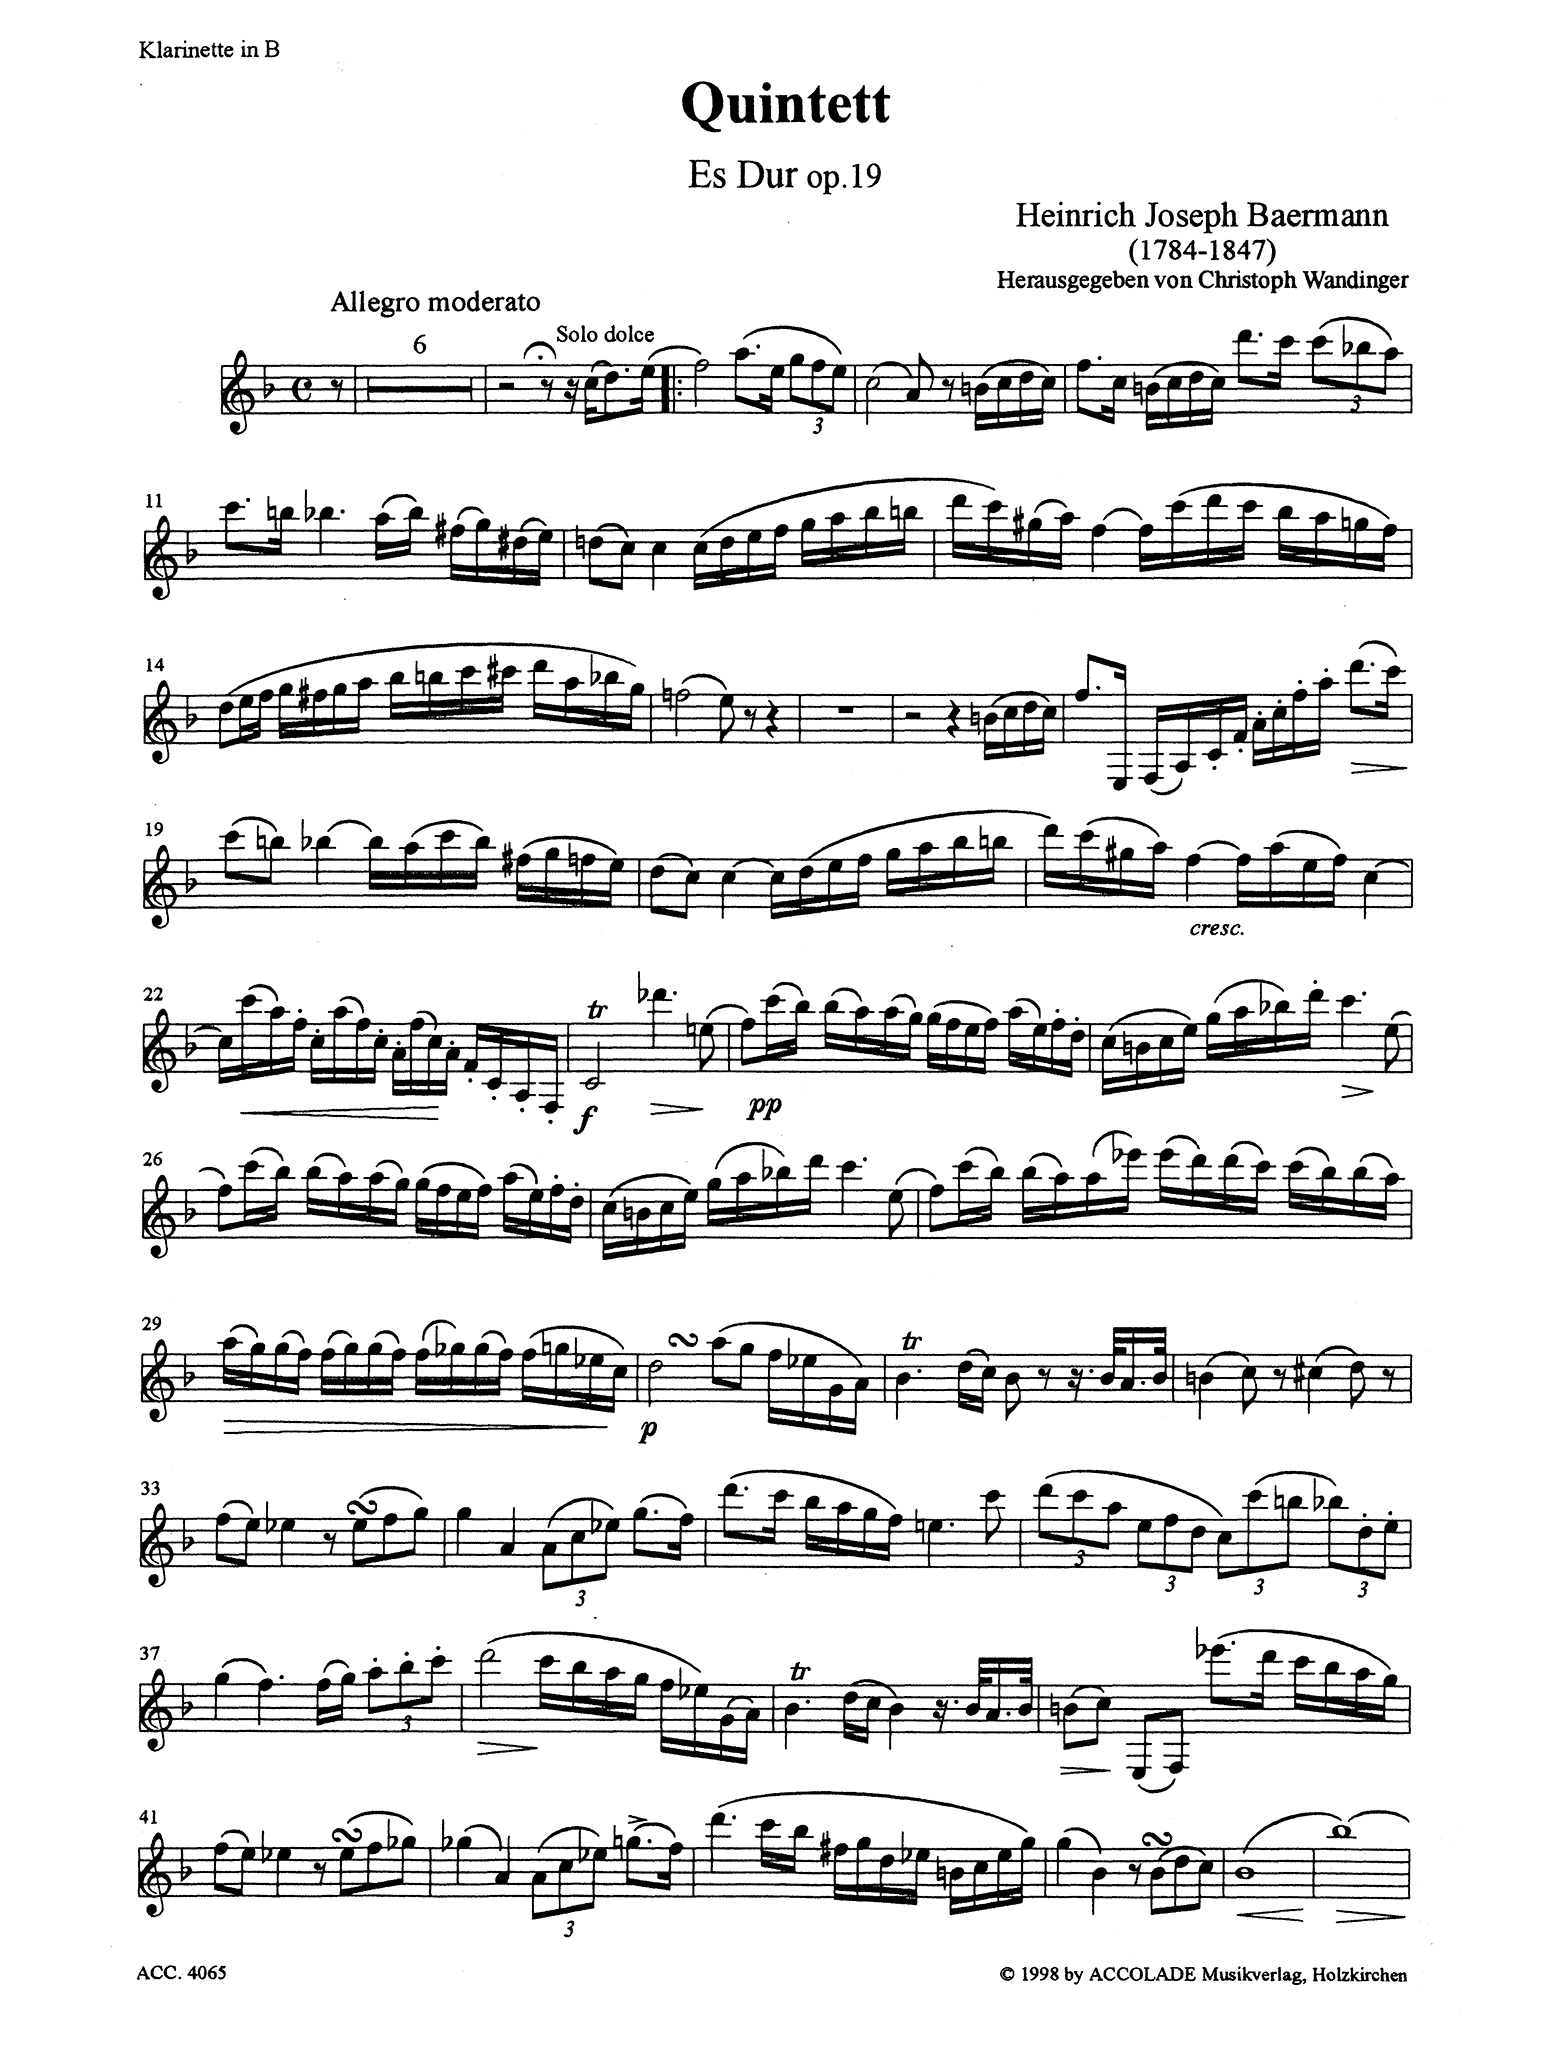 Baermann Quintet in E-flat Major clarinet part